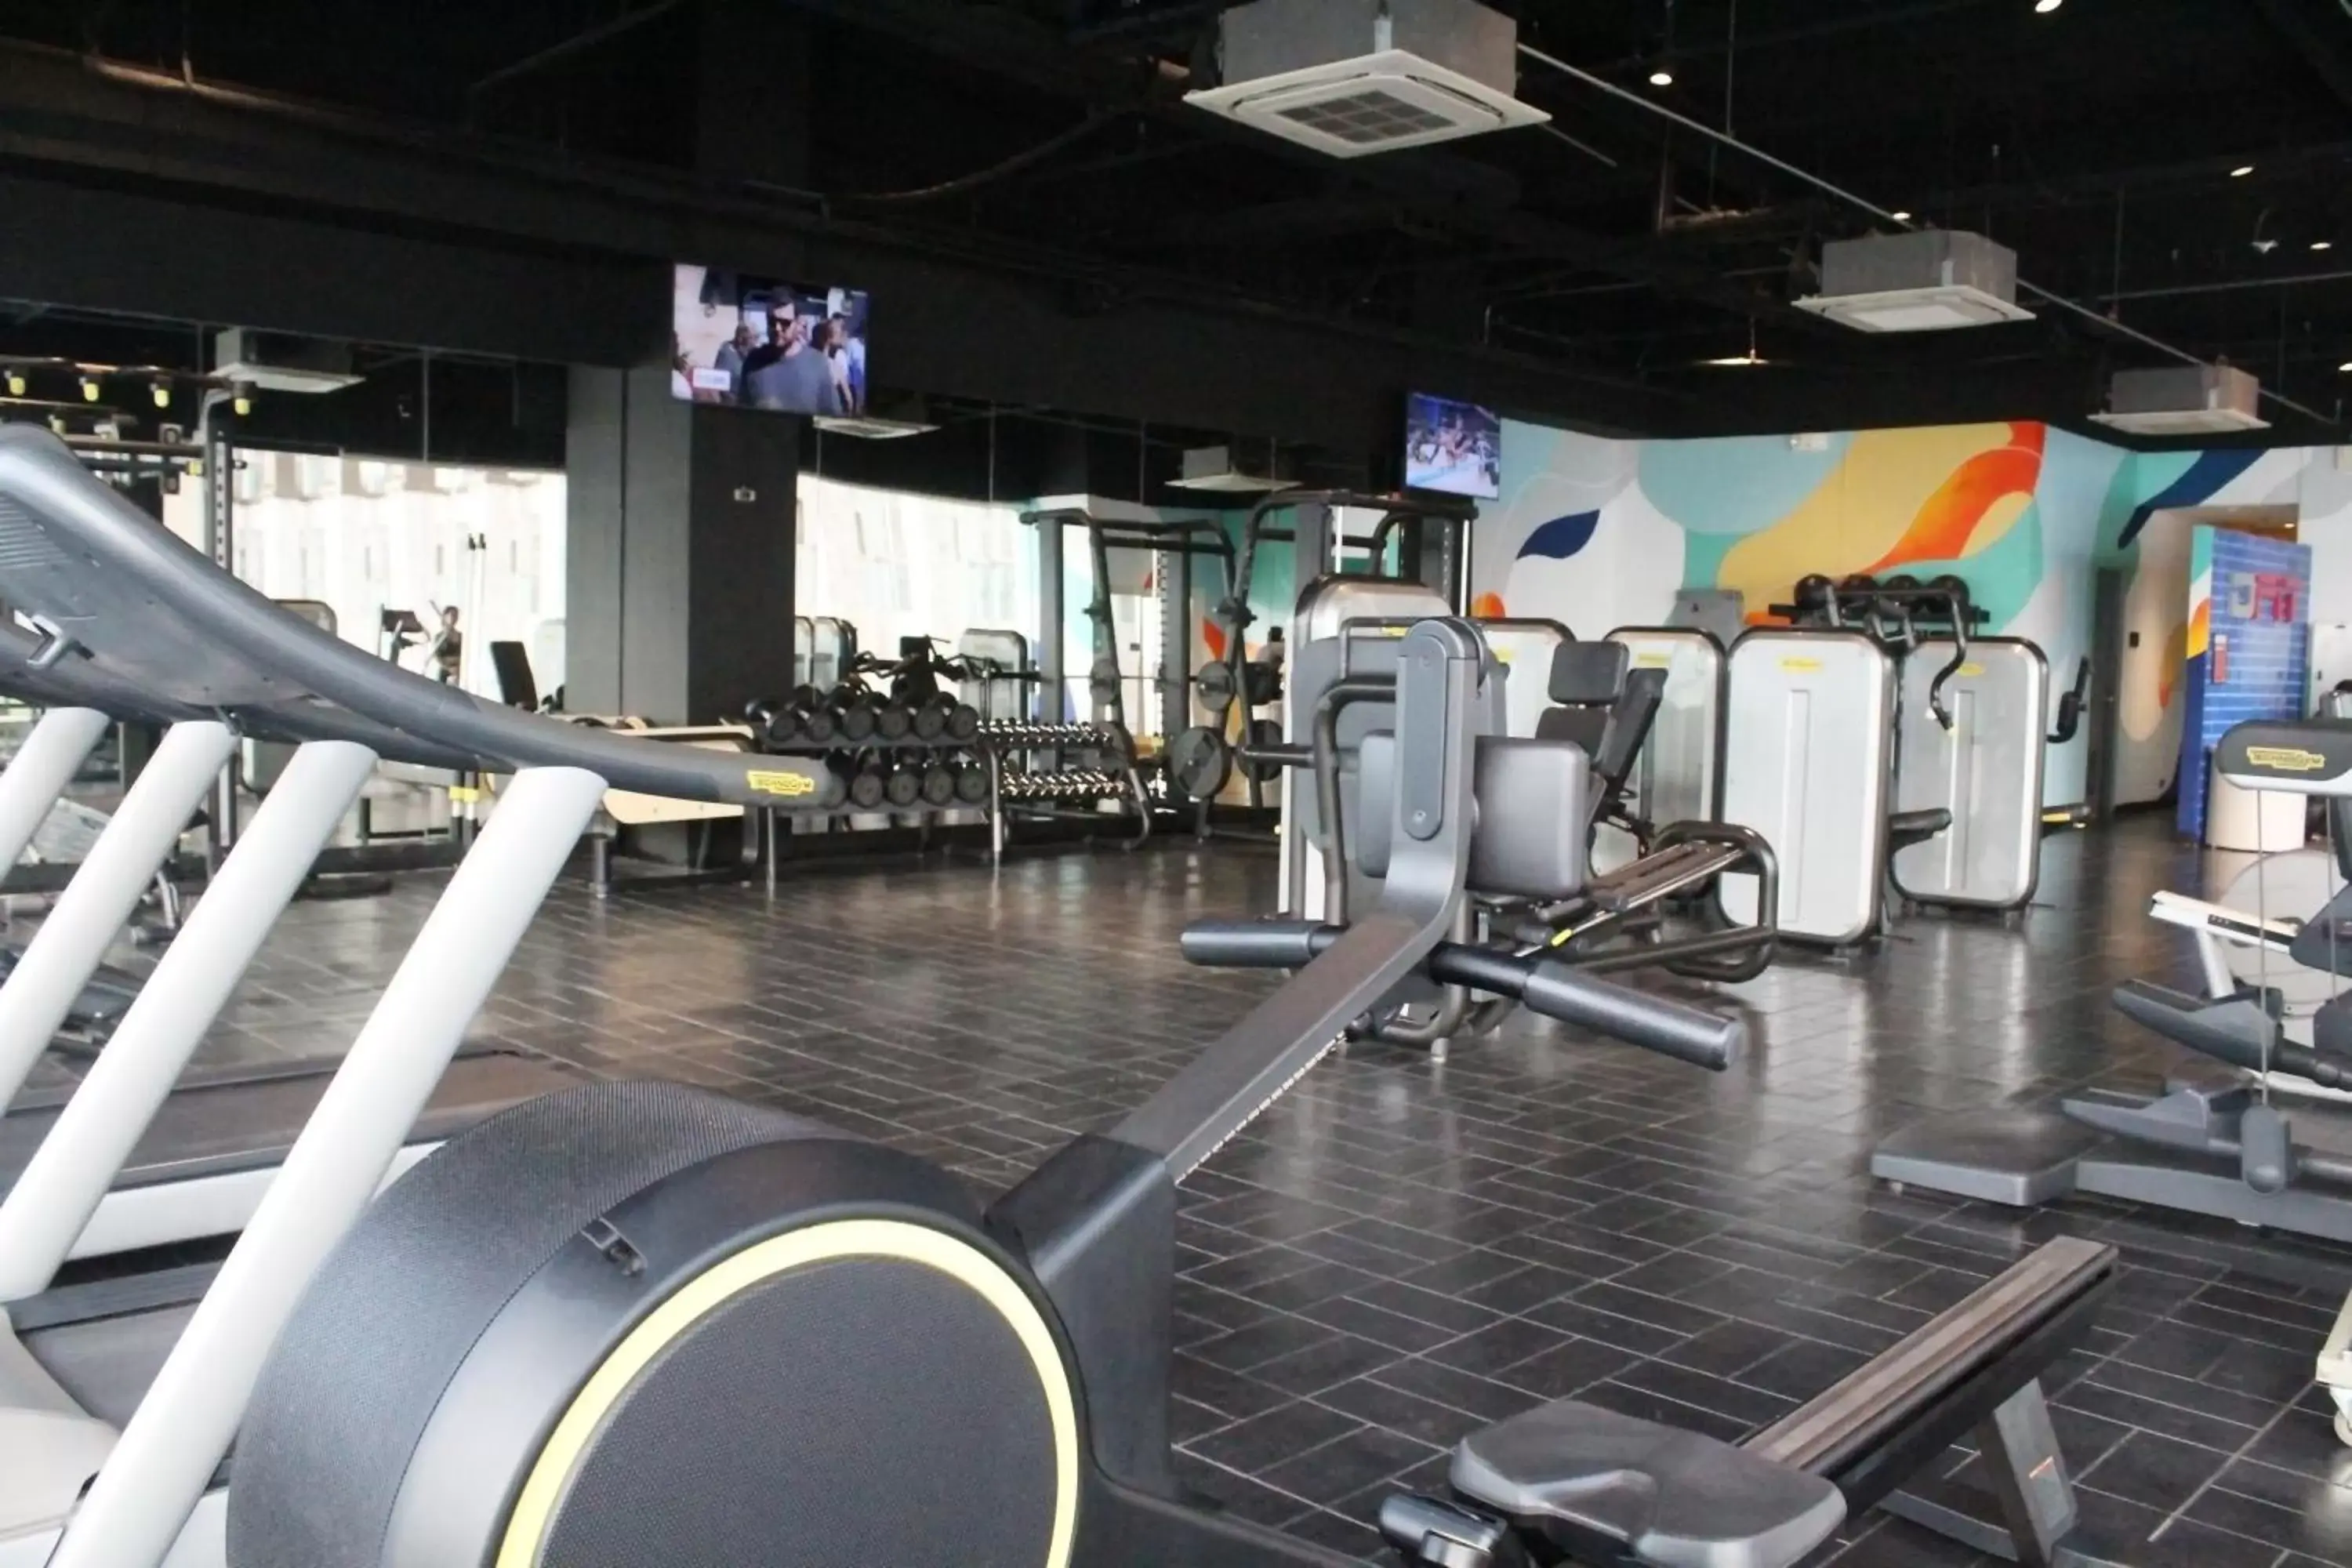 Fitness centre/facilities, Fitness Center/Facilities in Dusit Thani Mactan Cebu Resort